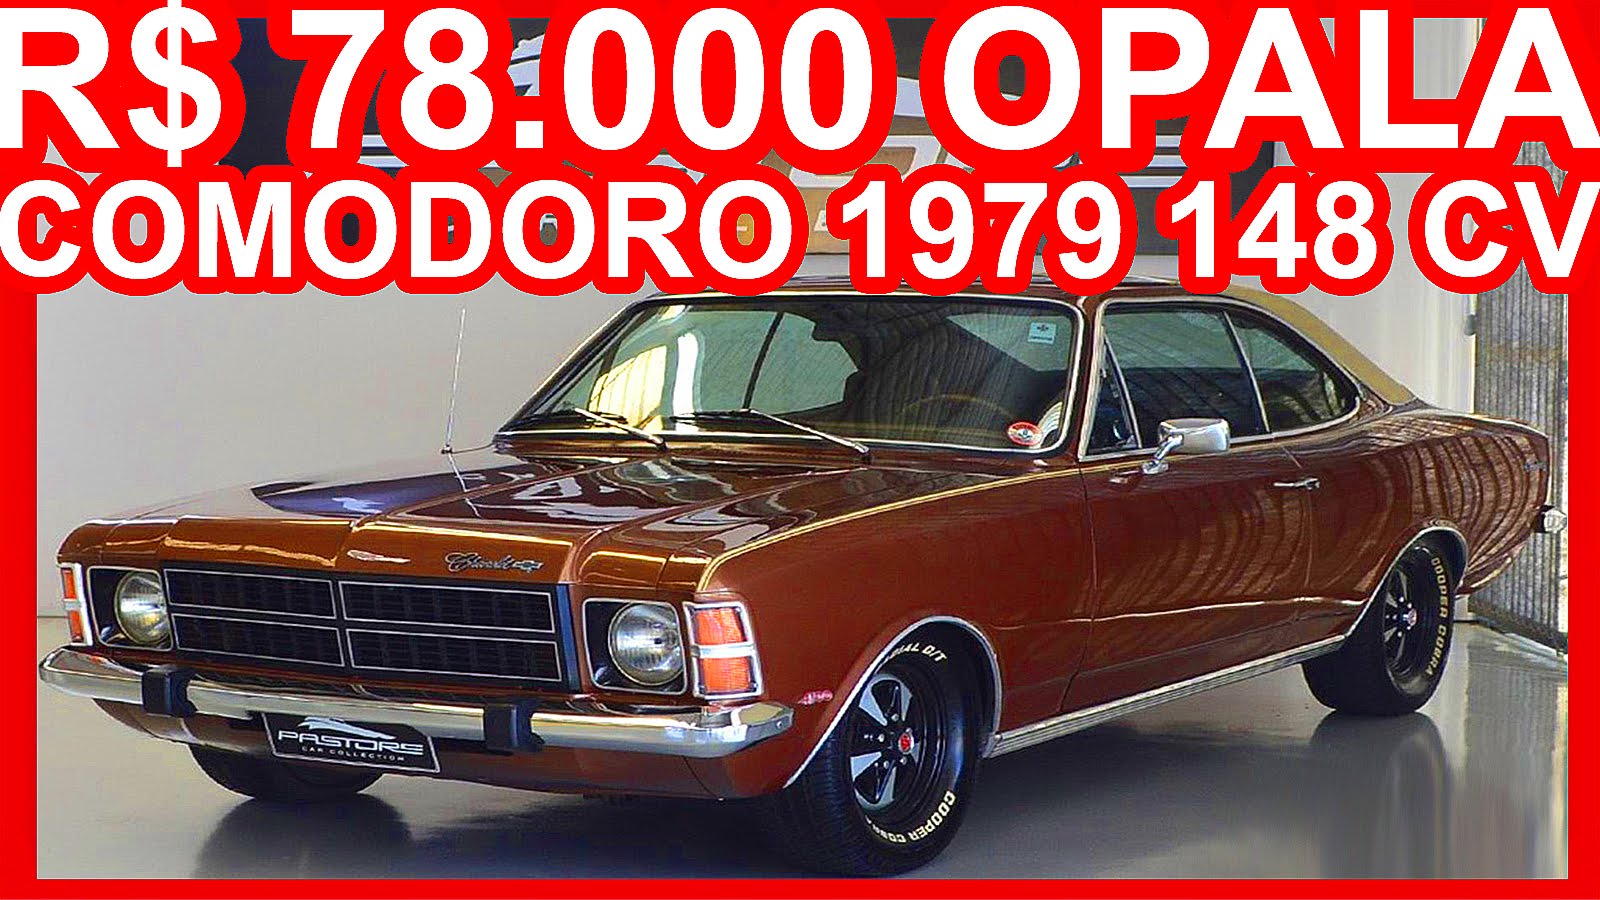 Chevrolet Opala Comodoro HD wallpapers, Desktop wallpaper - most viewed